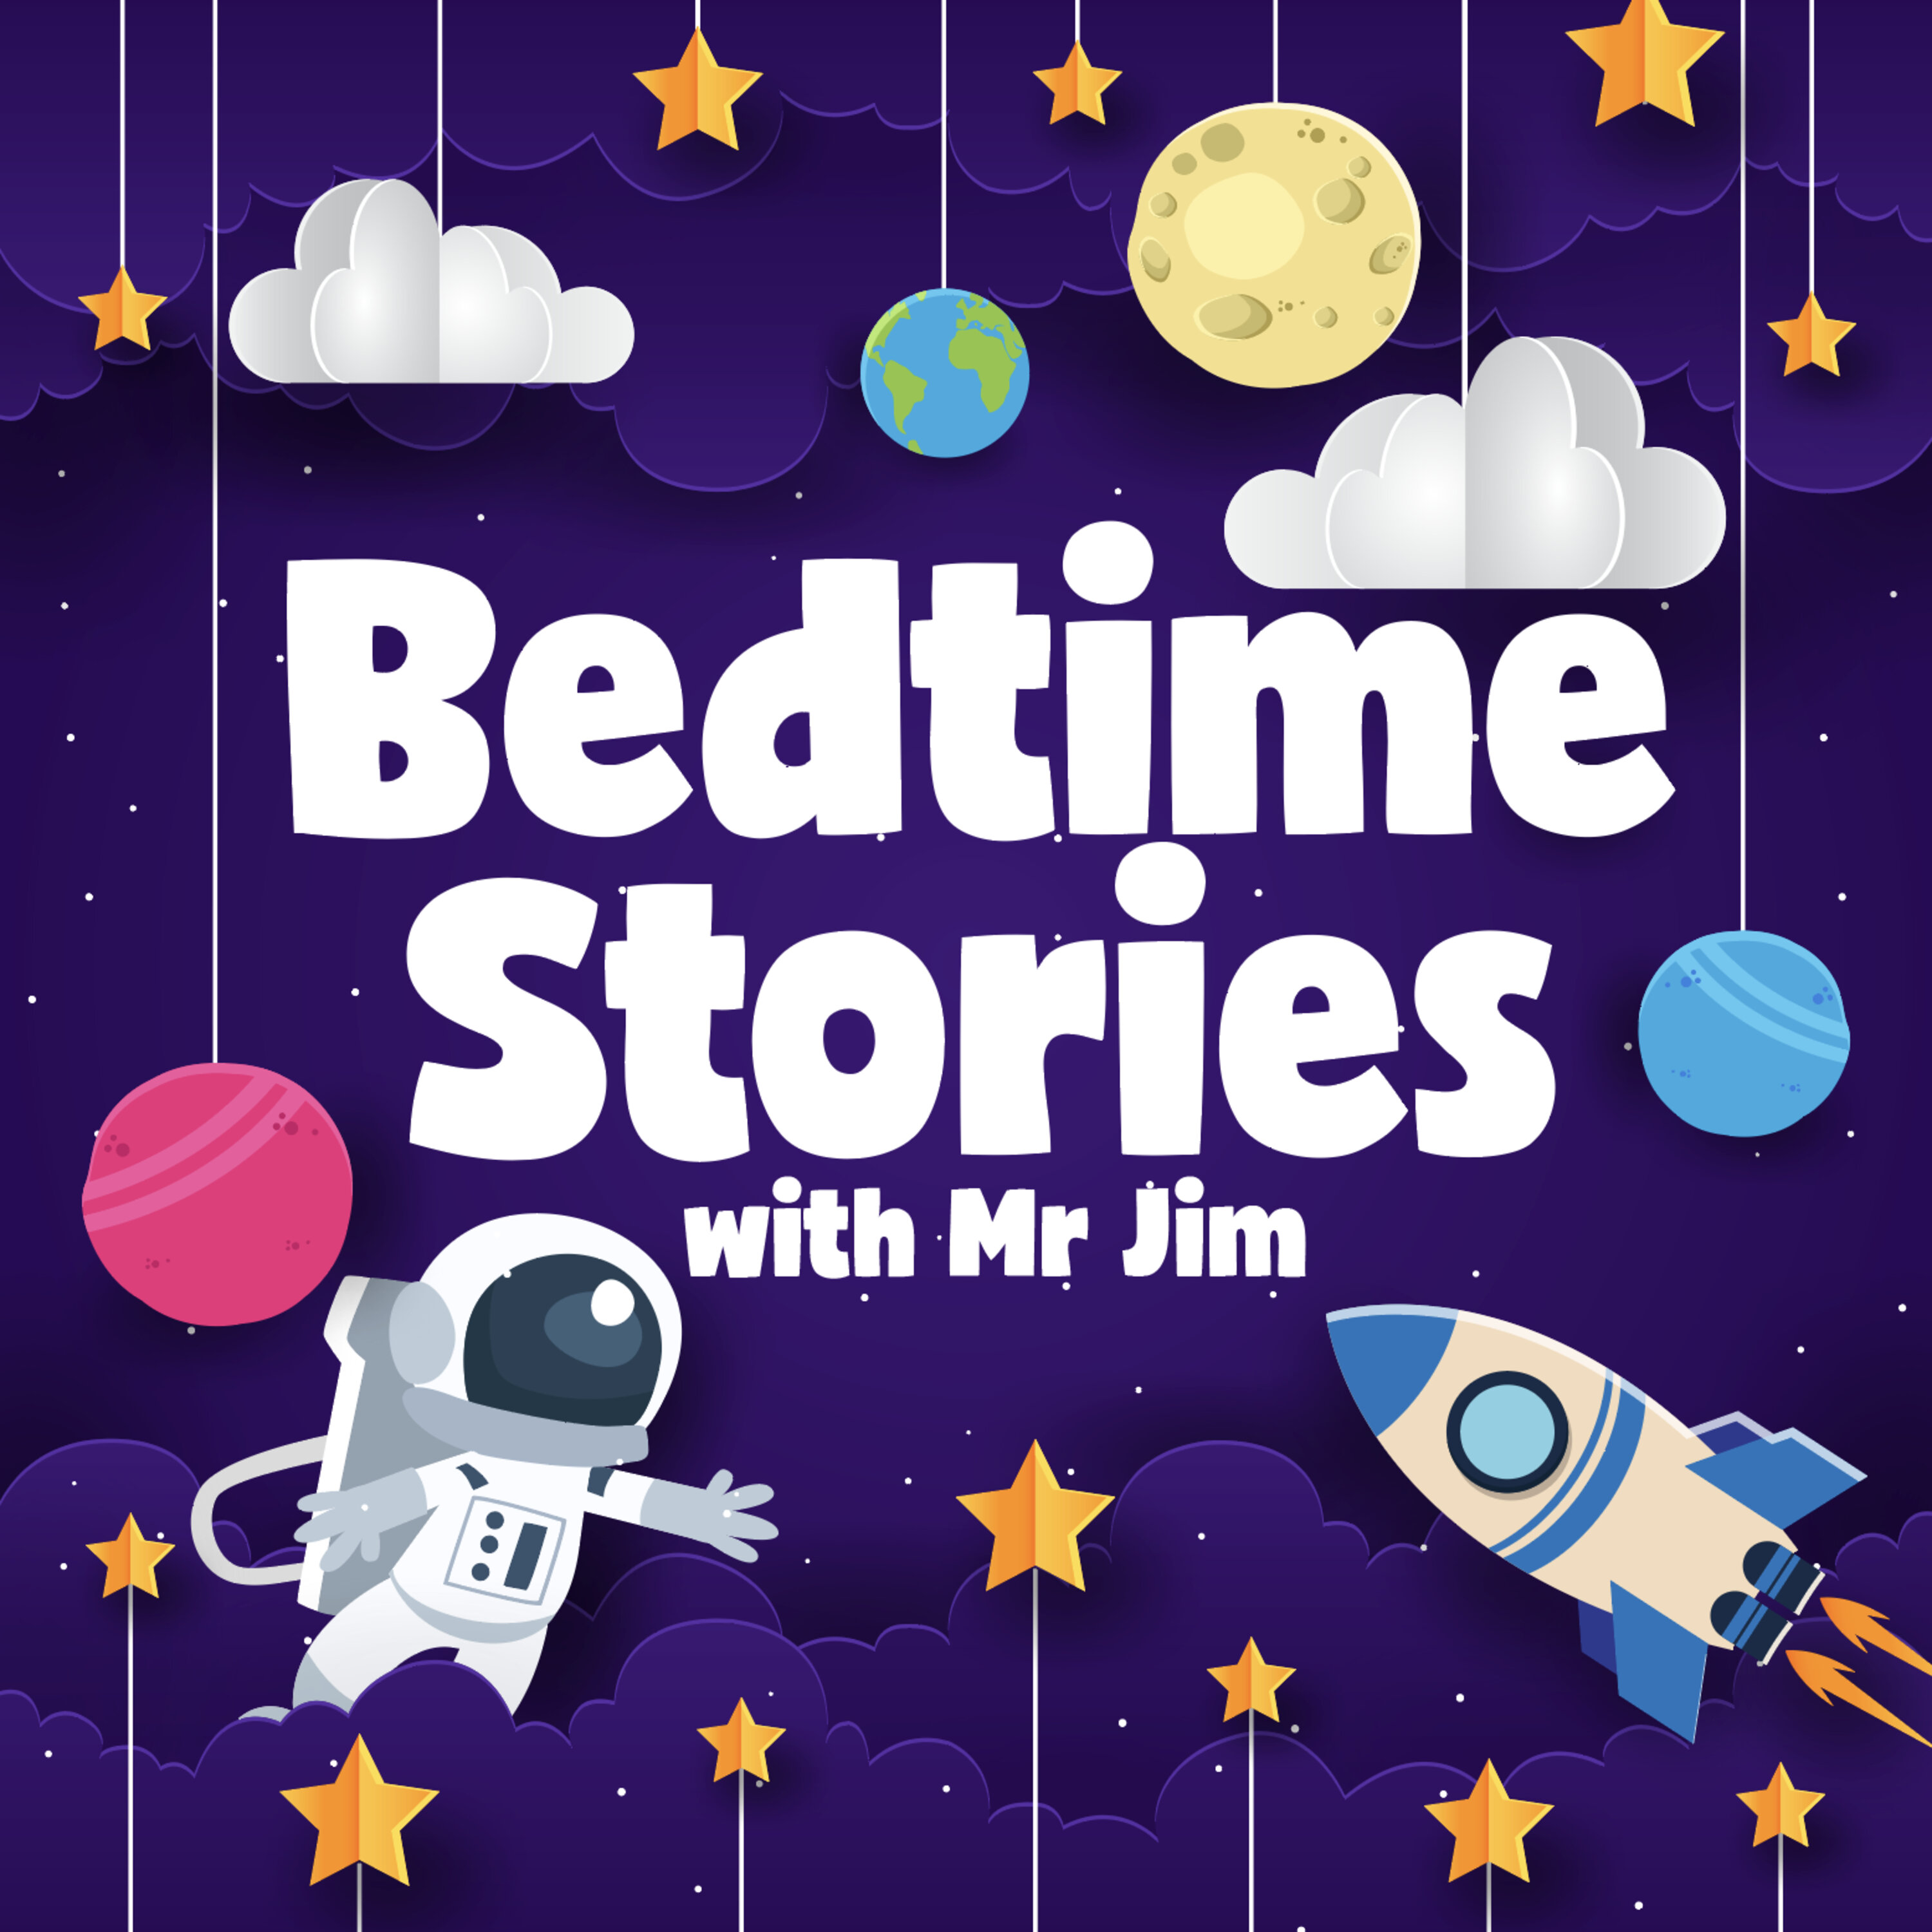 Must I Brush My Teeth? | Bedtime Stories for Kids